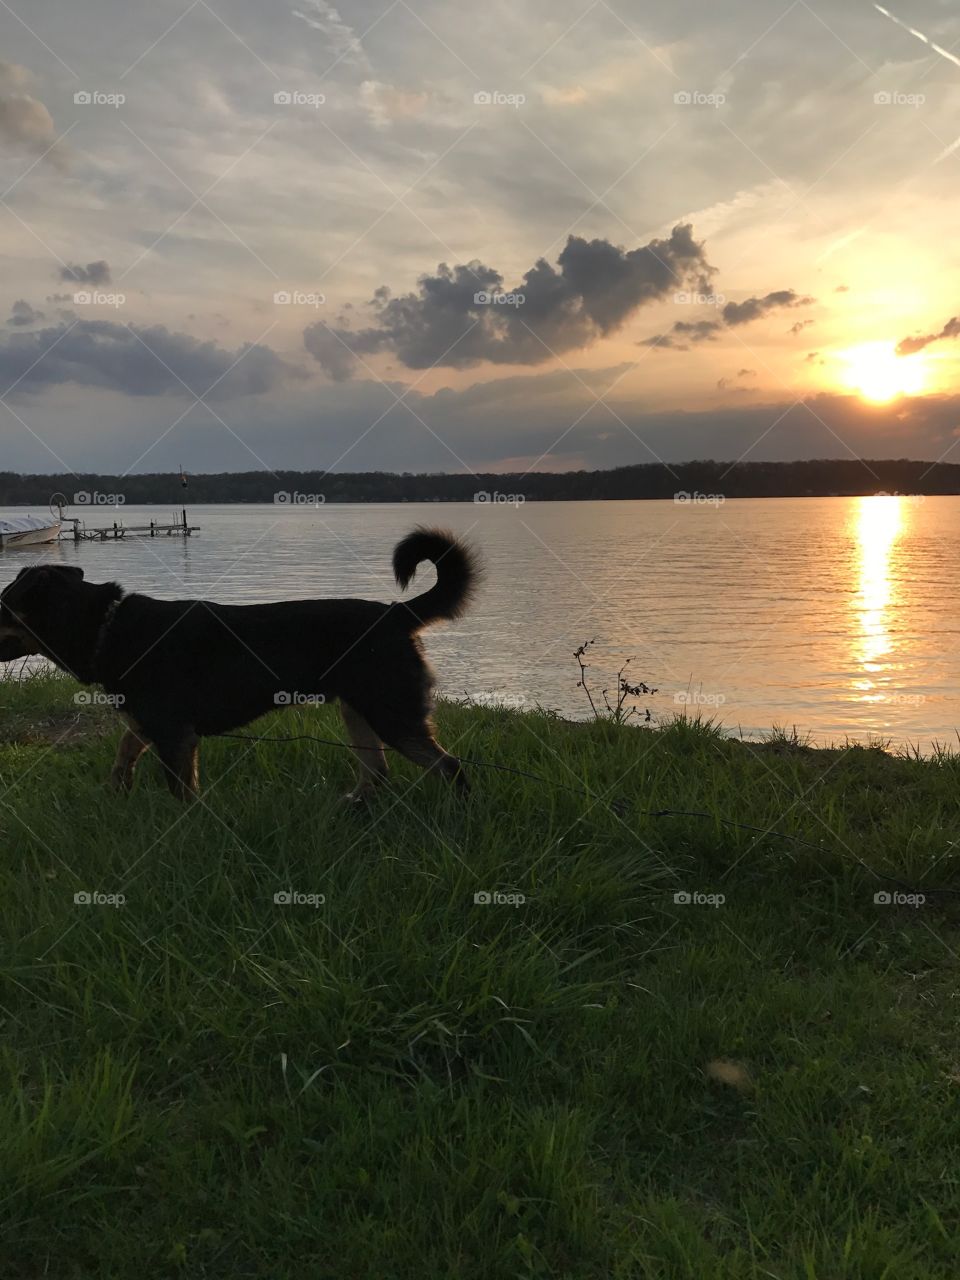 Landscape, Water, Lake, Sunset, Dog